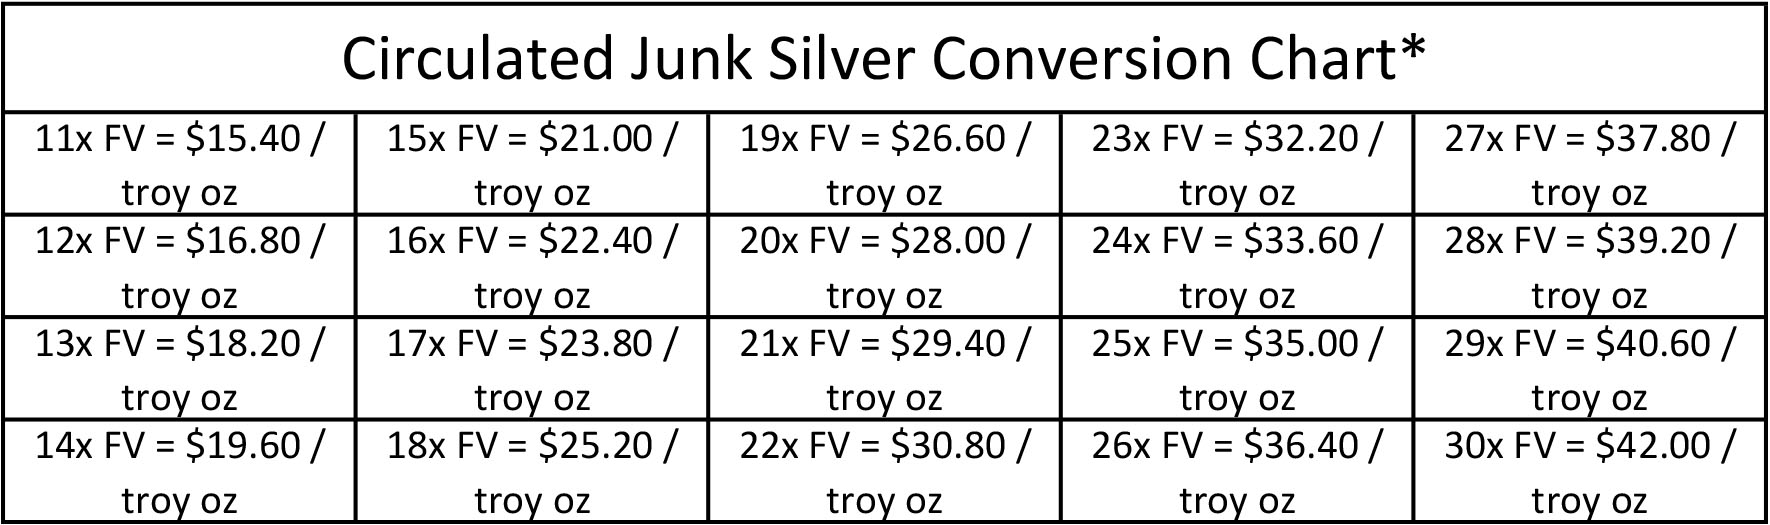 circulated junk silver conversion chart